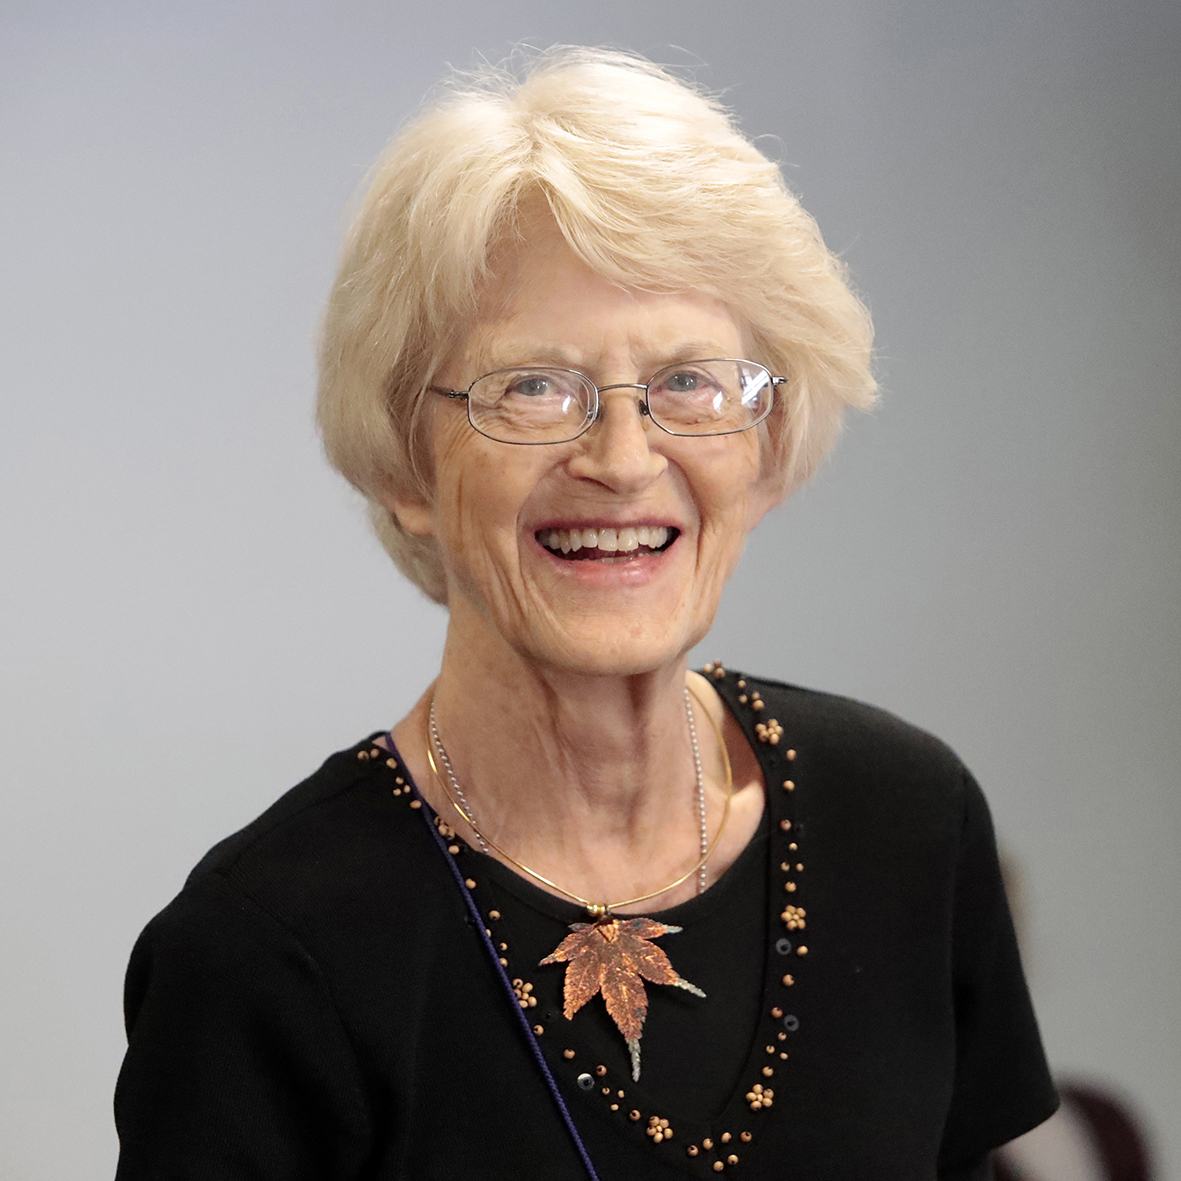 Obituary: Barbara Stevens Heusel